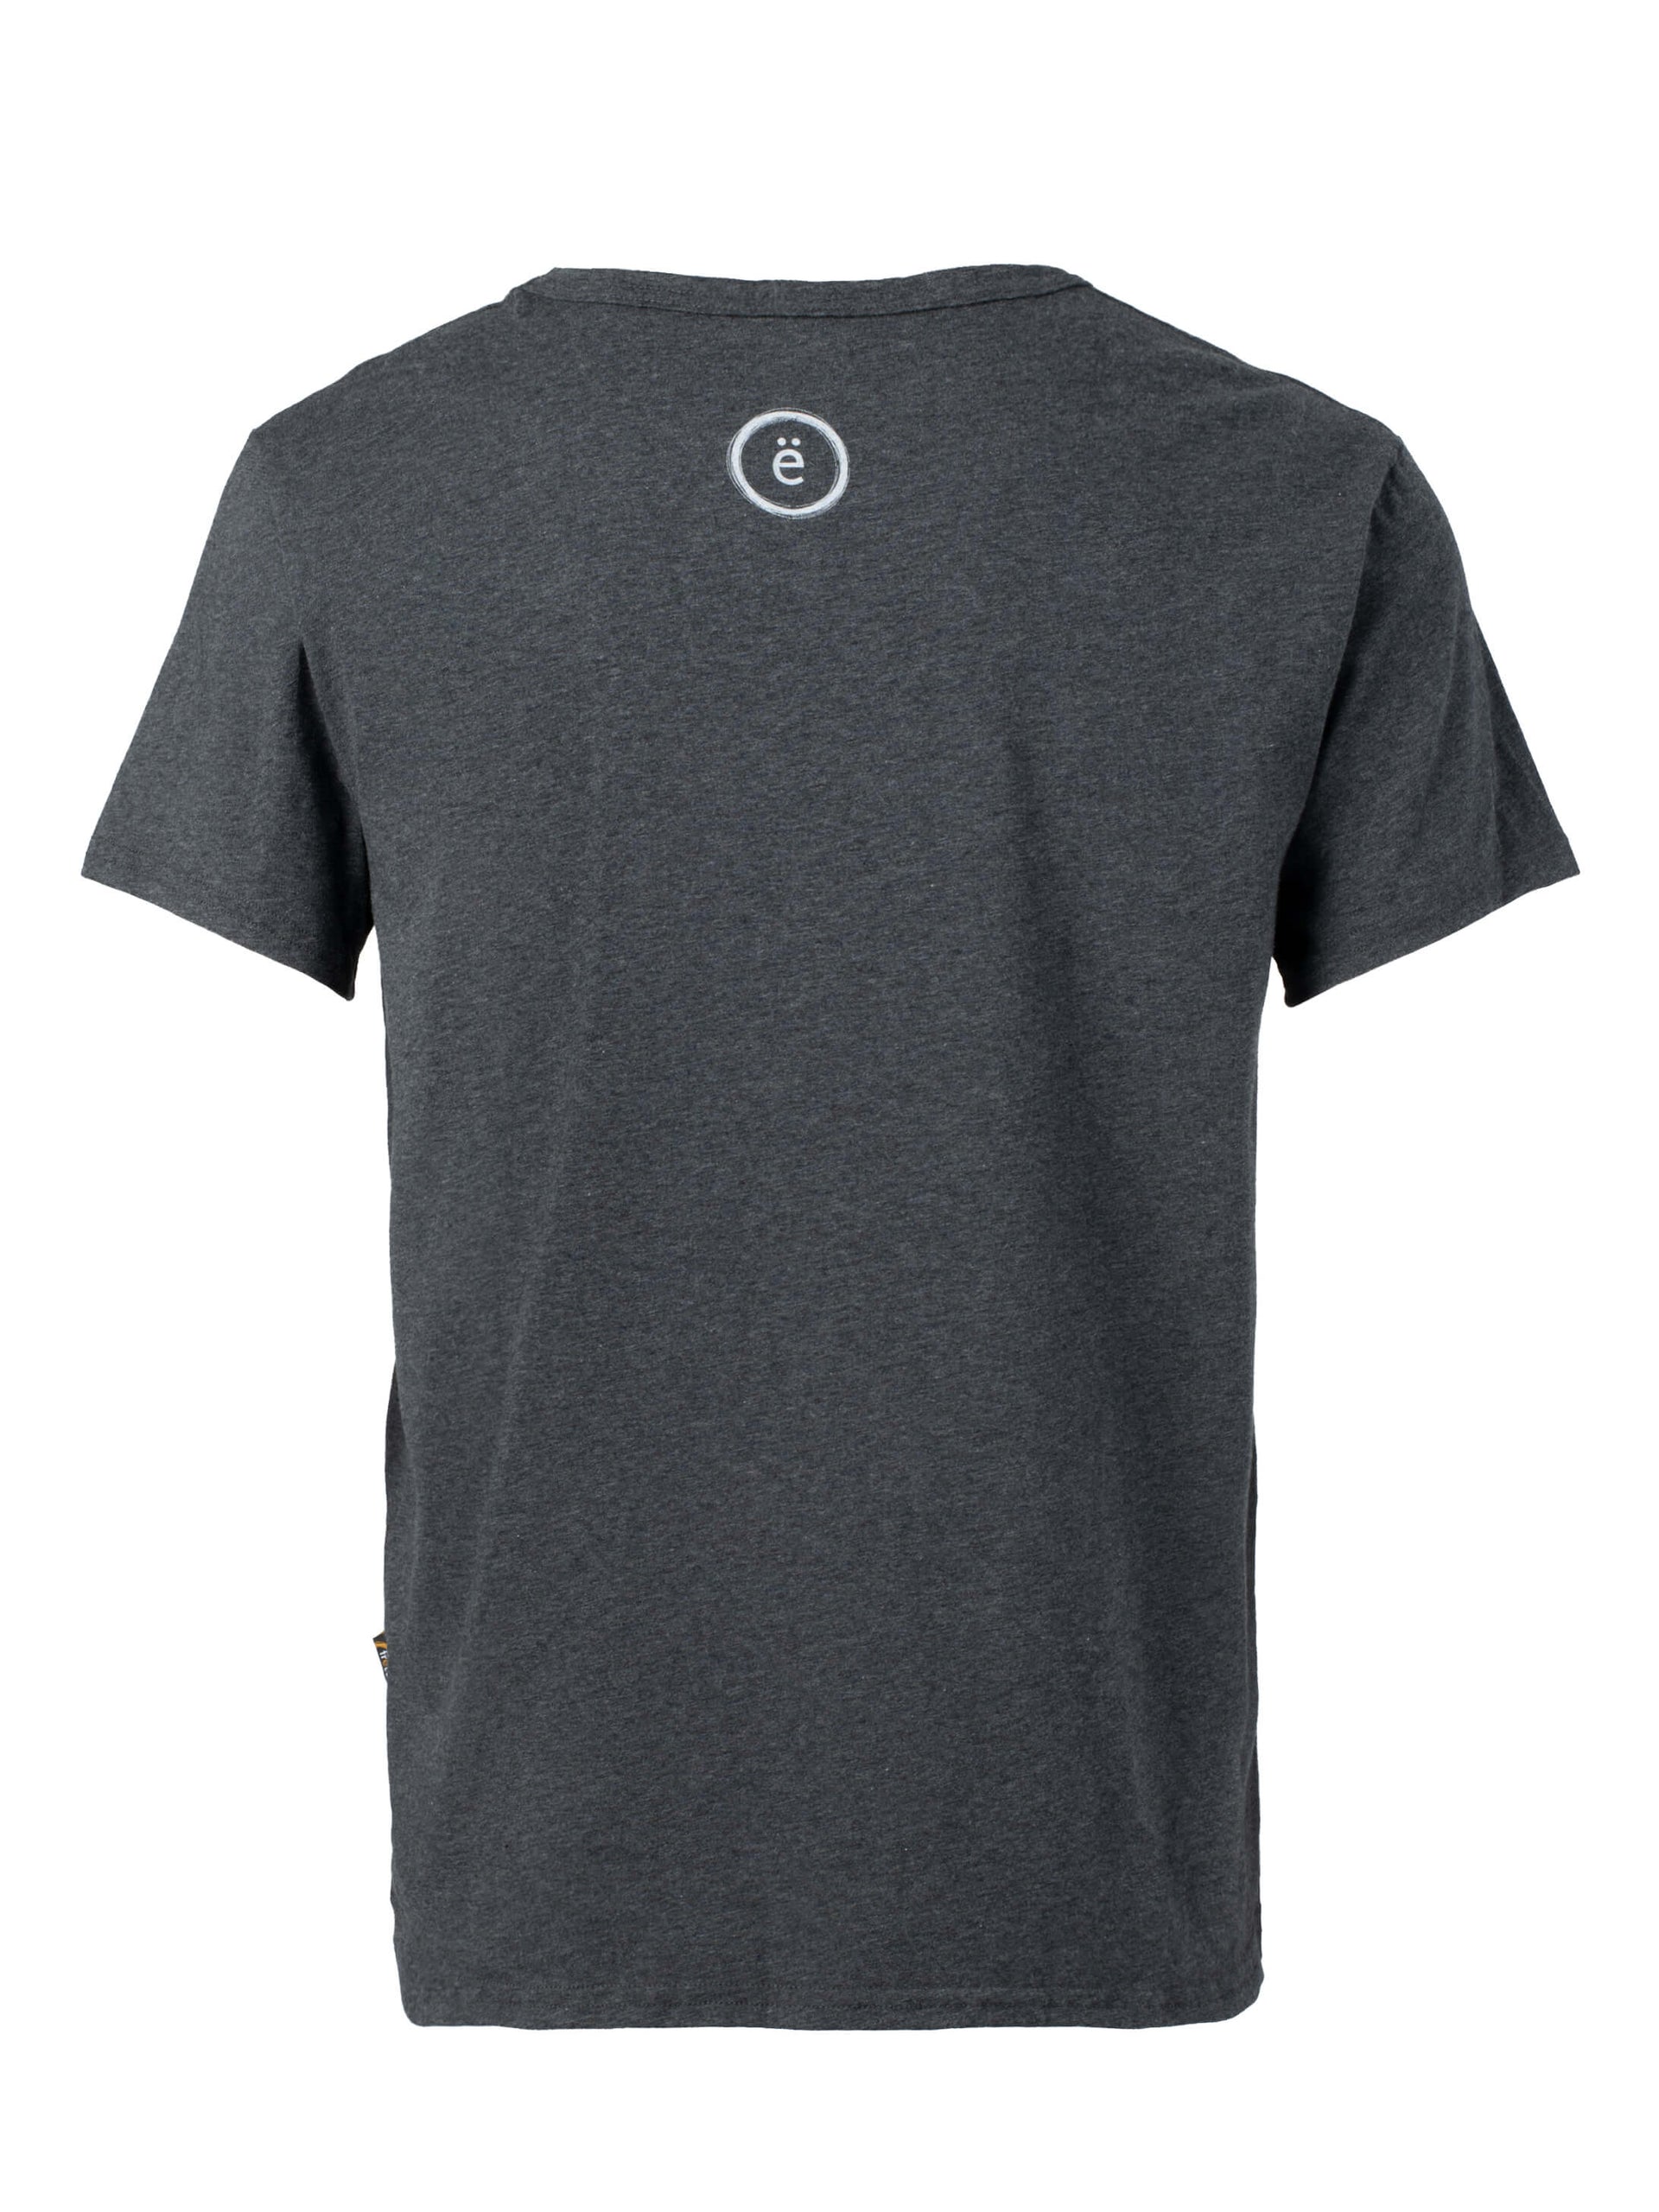 T-shirt-UNISEXE voilier-Coton bio-Charcoal-ghost dos-FC10